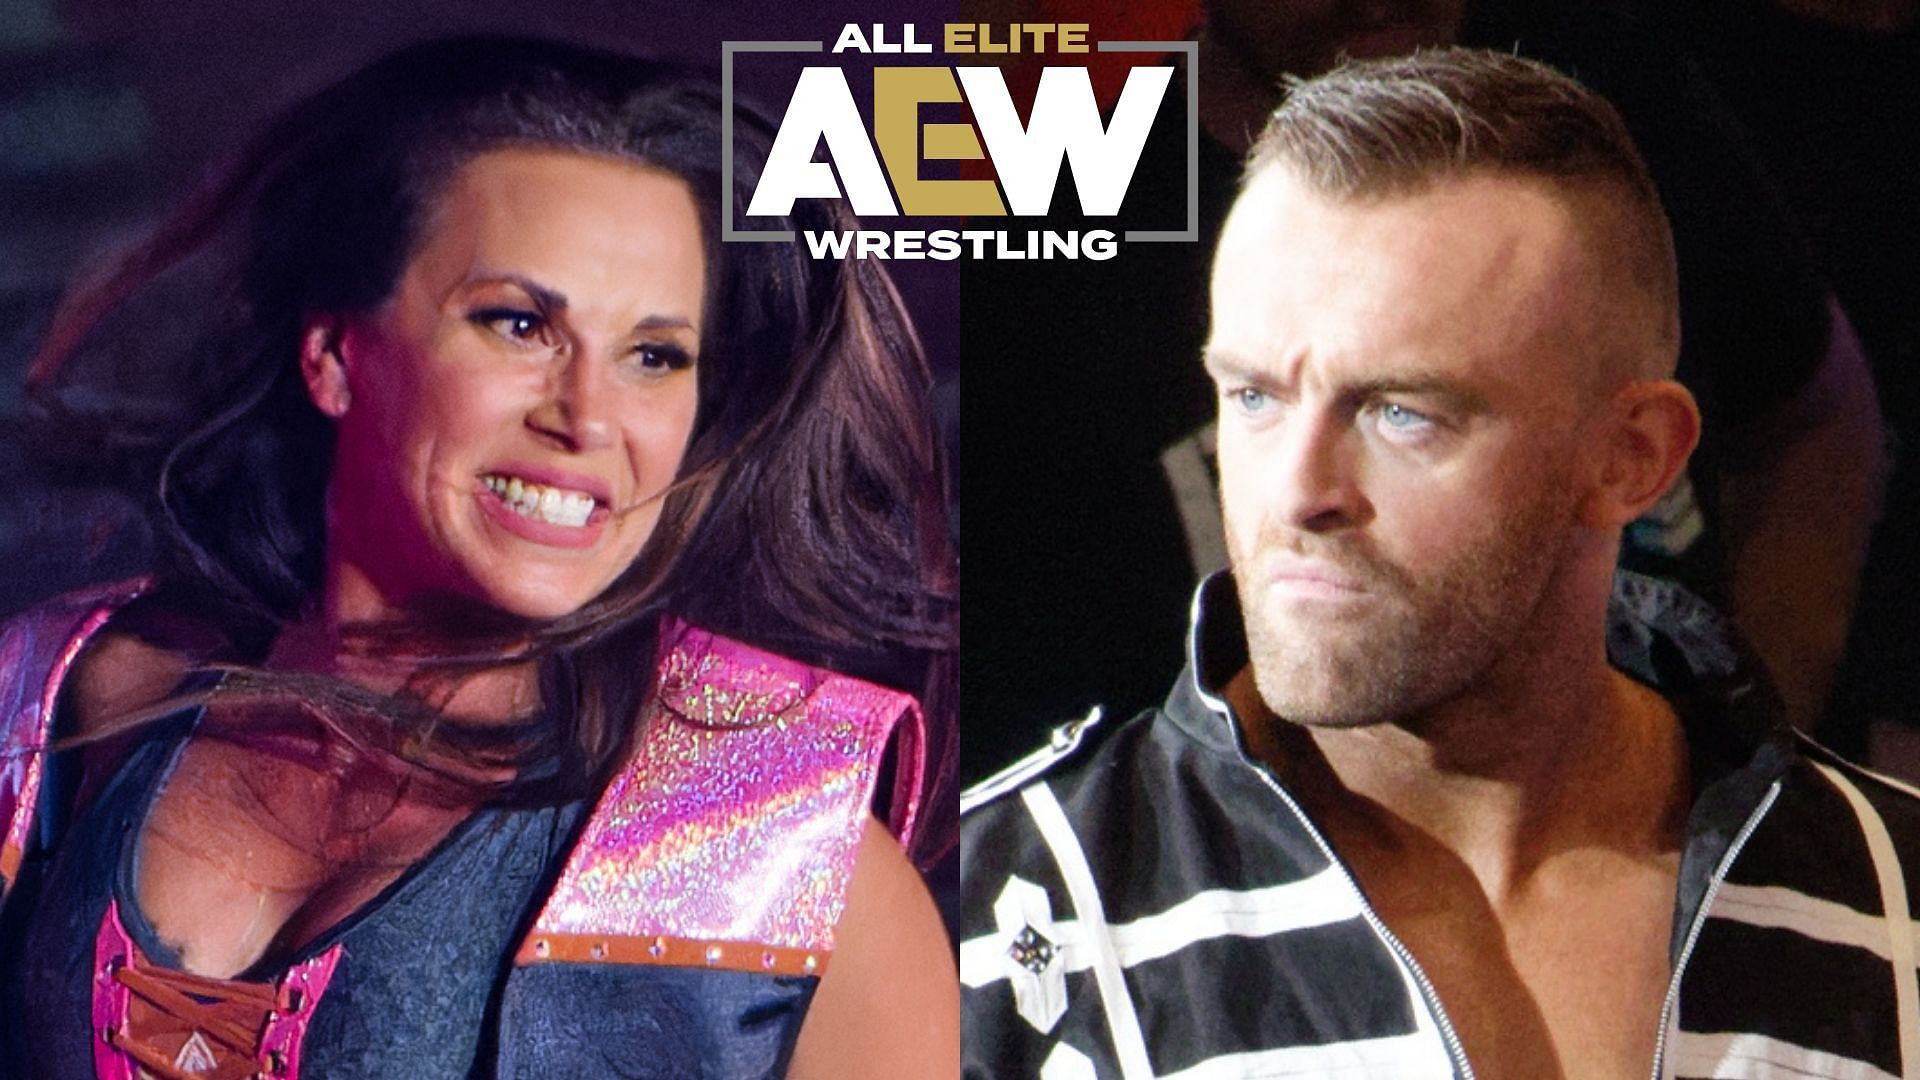 Why did Nick Aldis choose WWE over AEW?